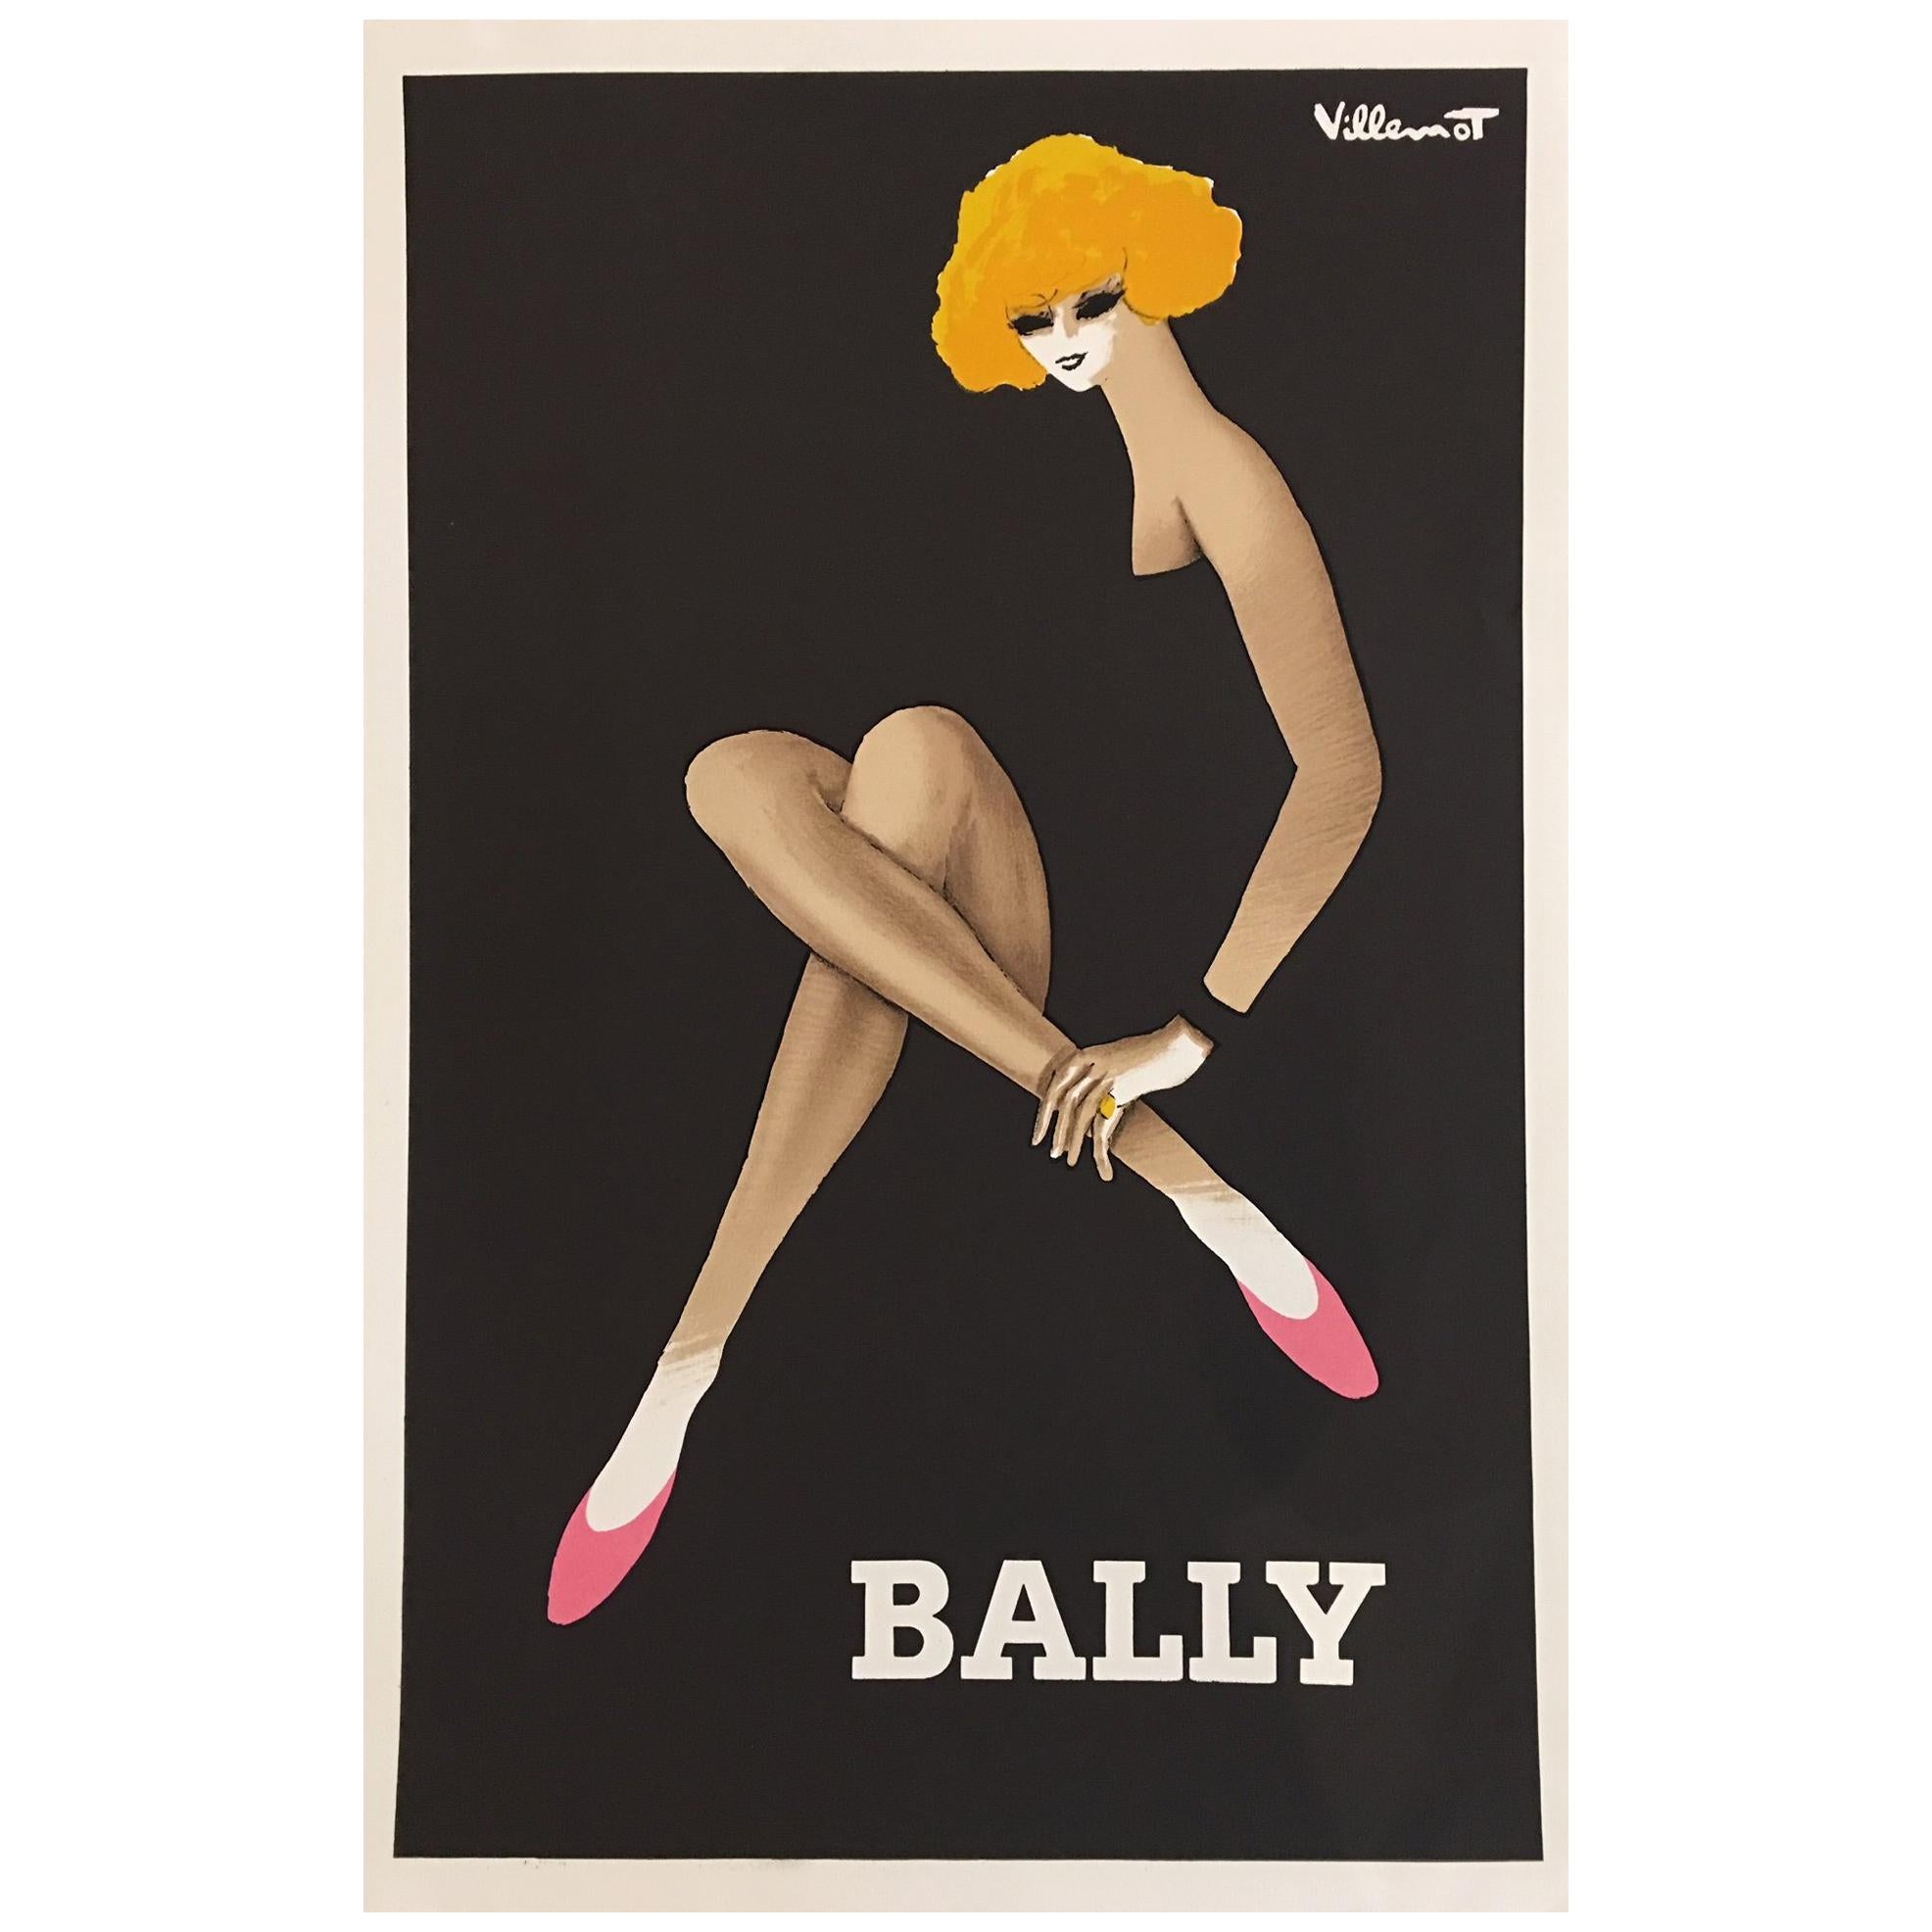 Original Vintage PosterBally Blonde by Bernard Villemot 1982 Lithograph poster